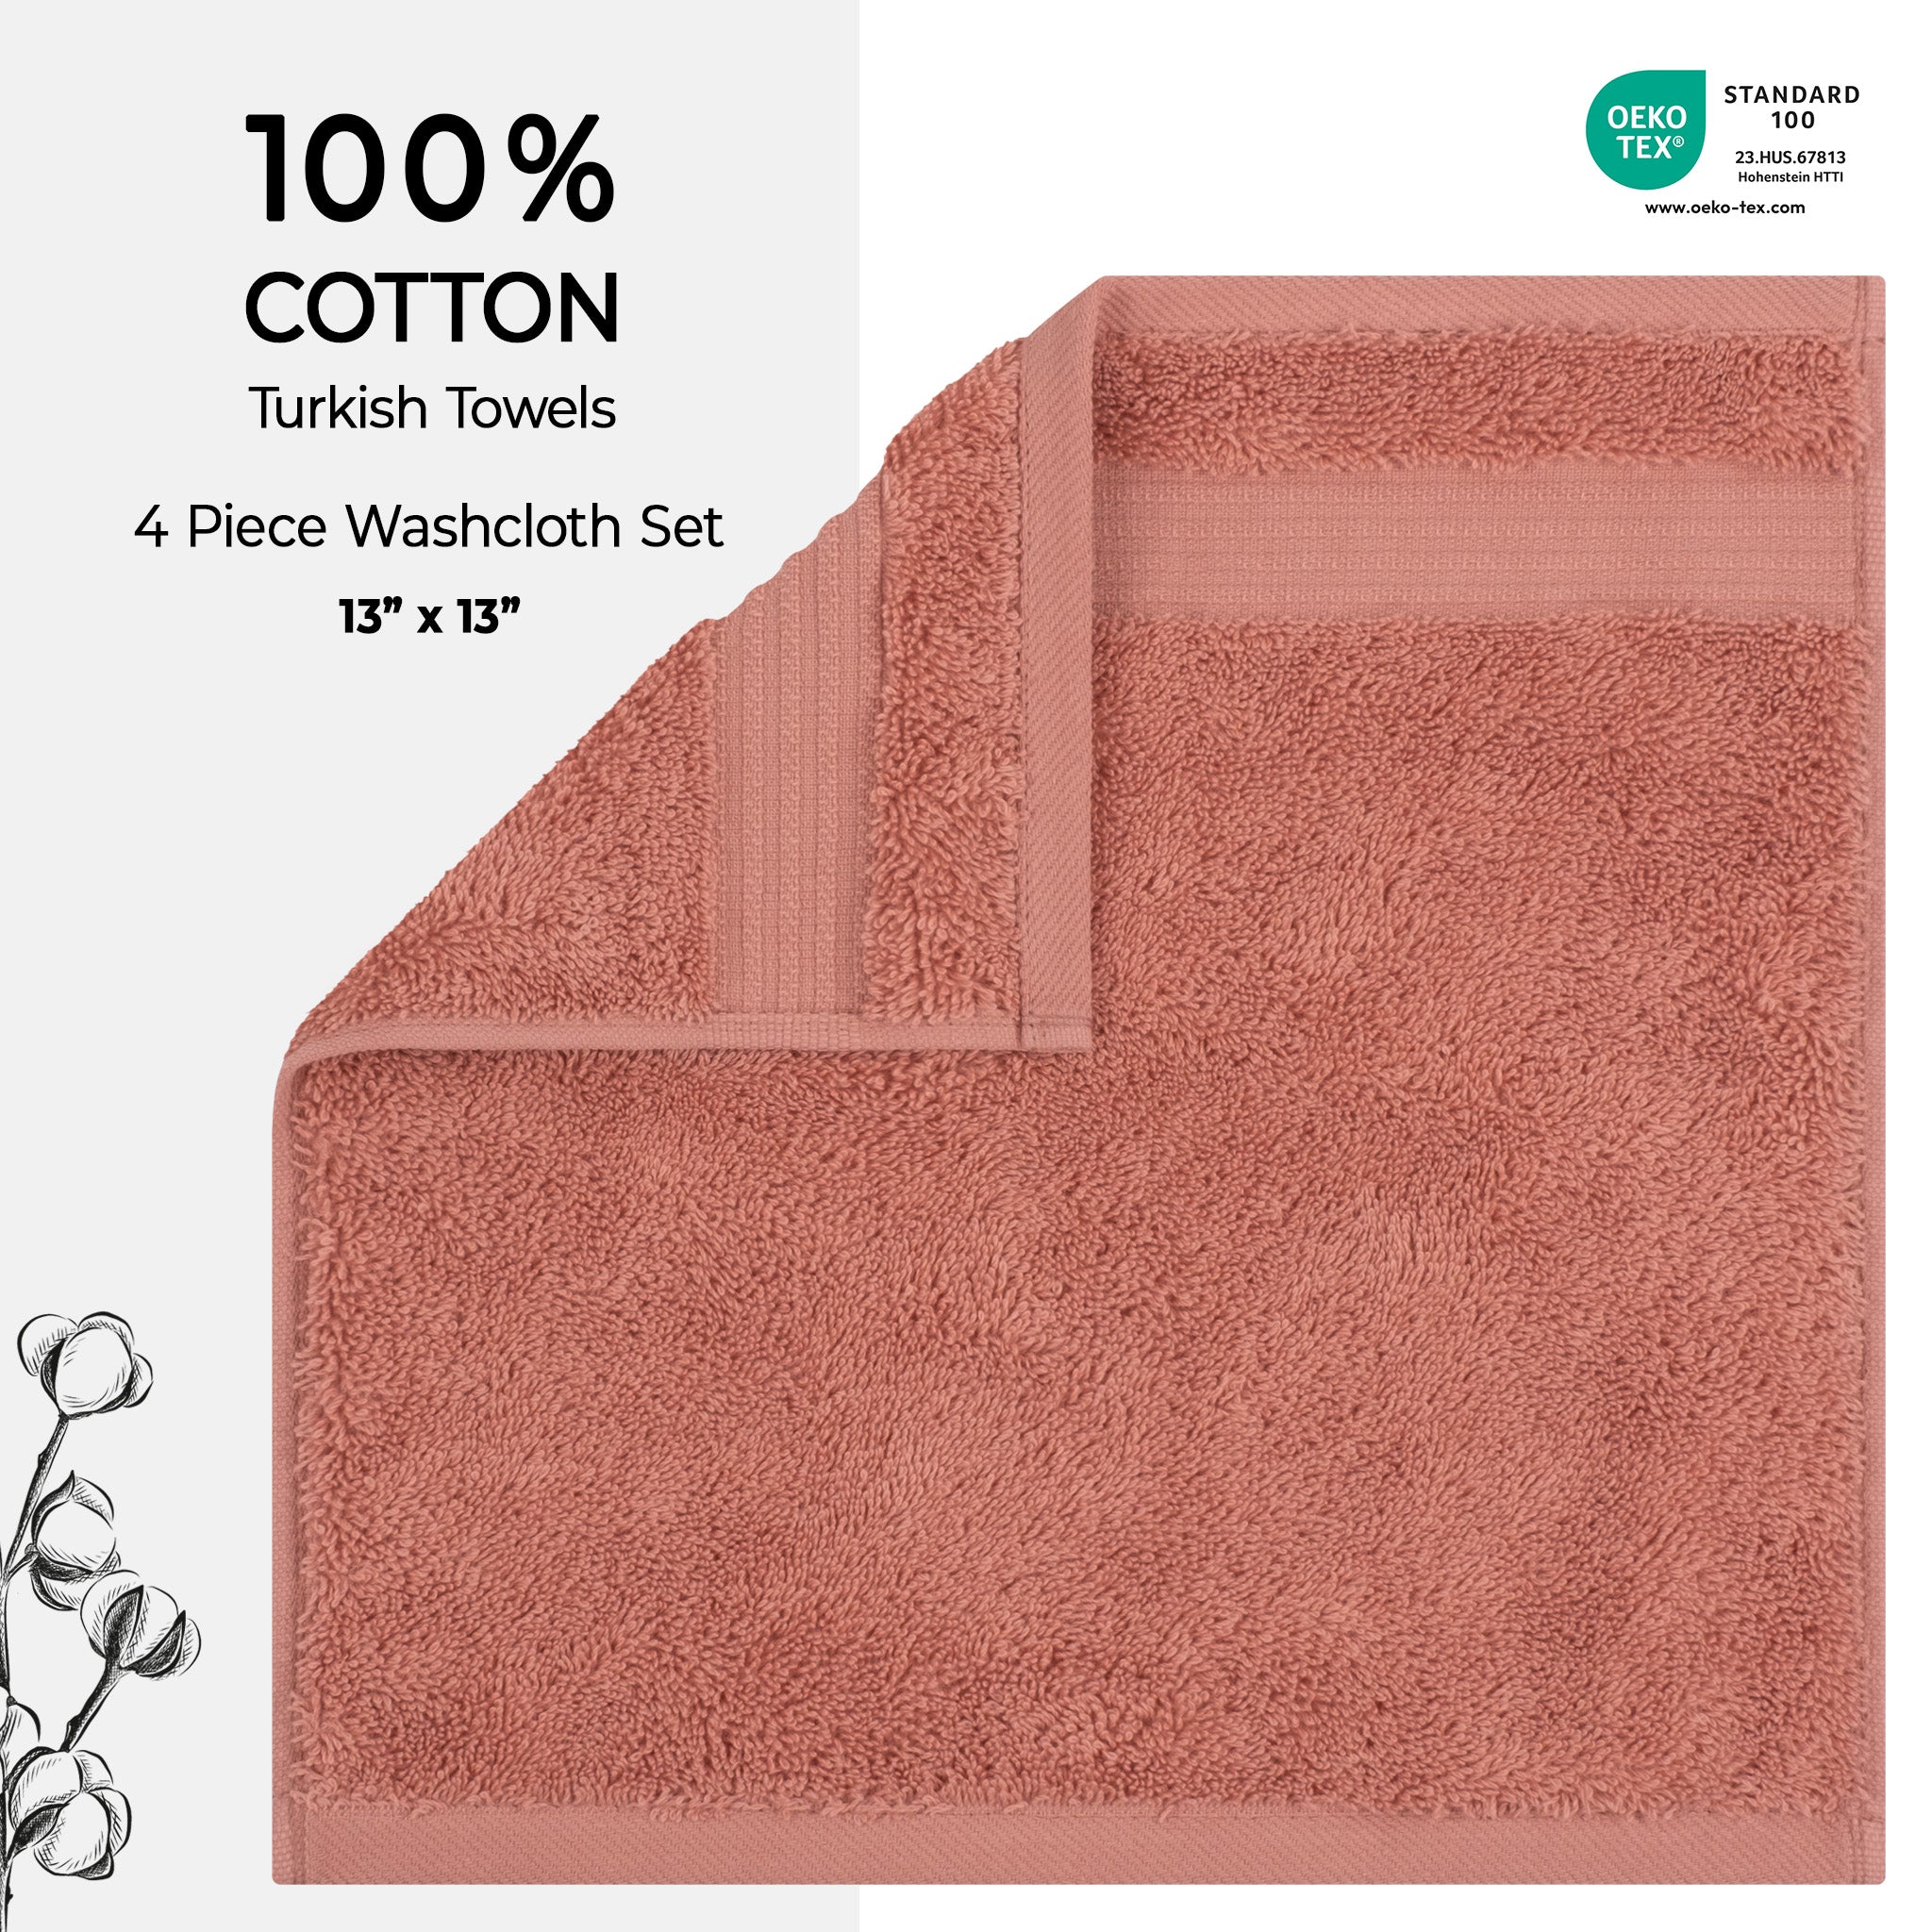 American Soft Linen Bekos 100% Cotton Turkish Towels, 4 Piece Washcloth Towel Set -coral-02